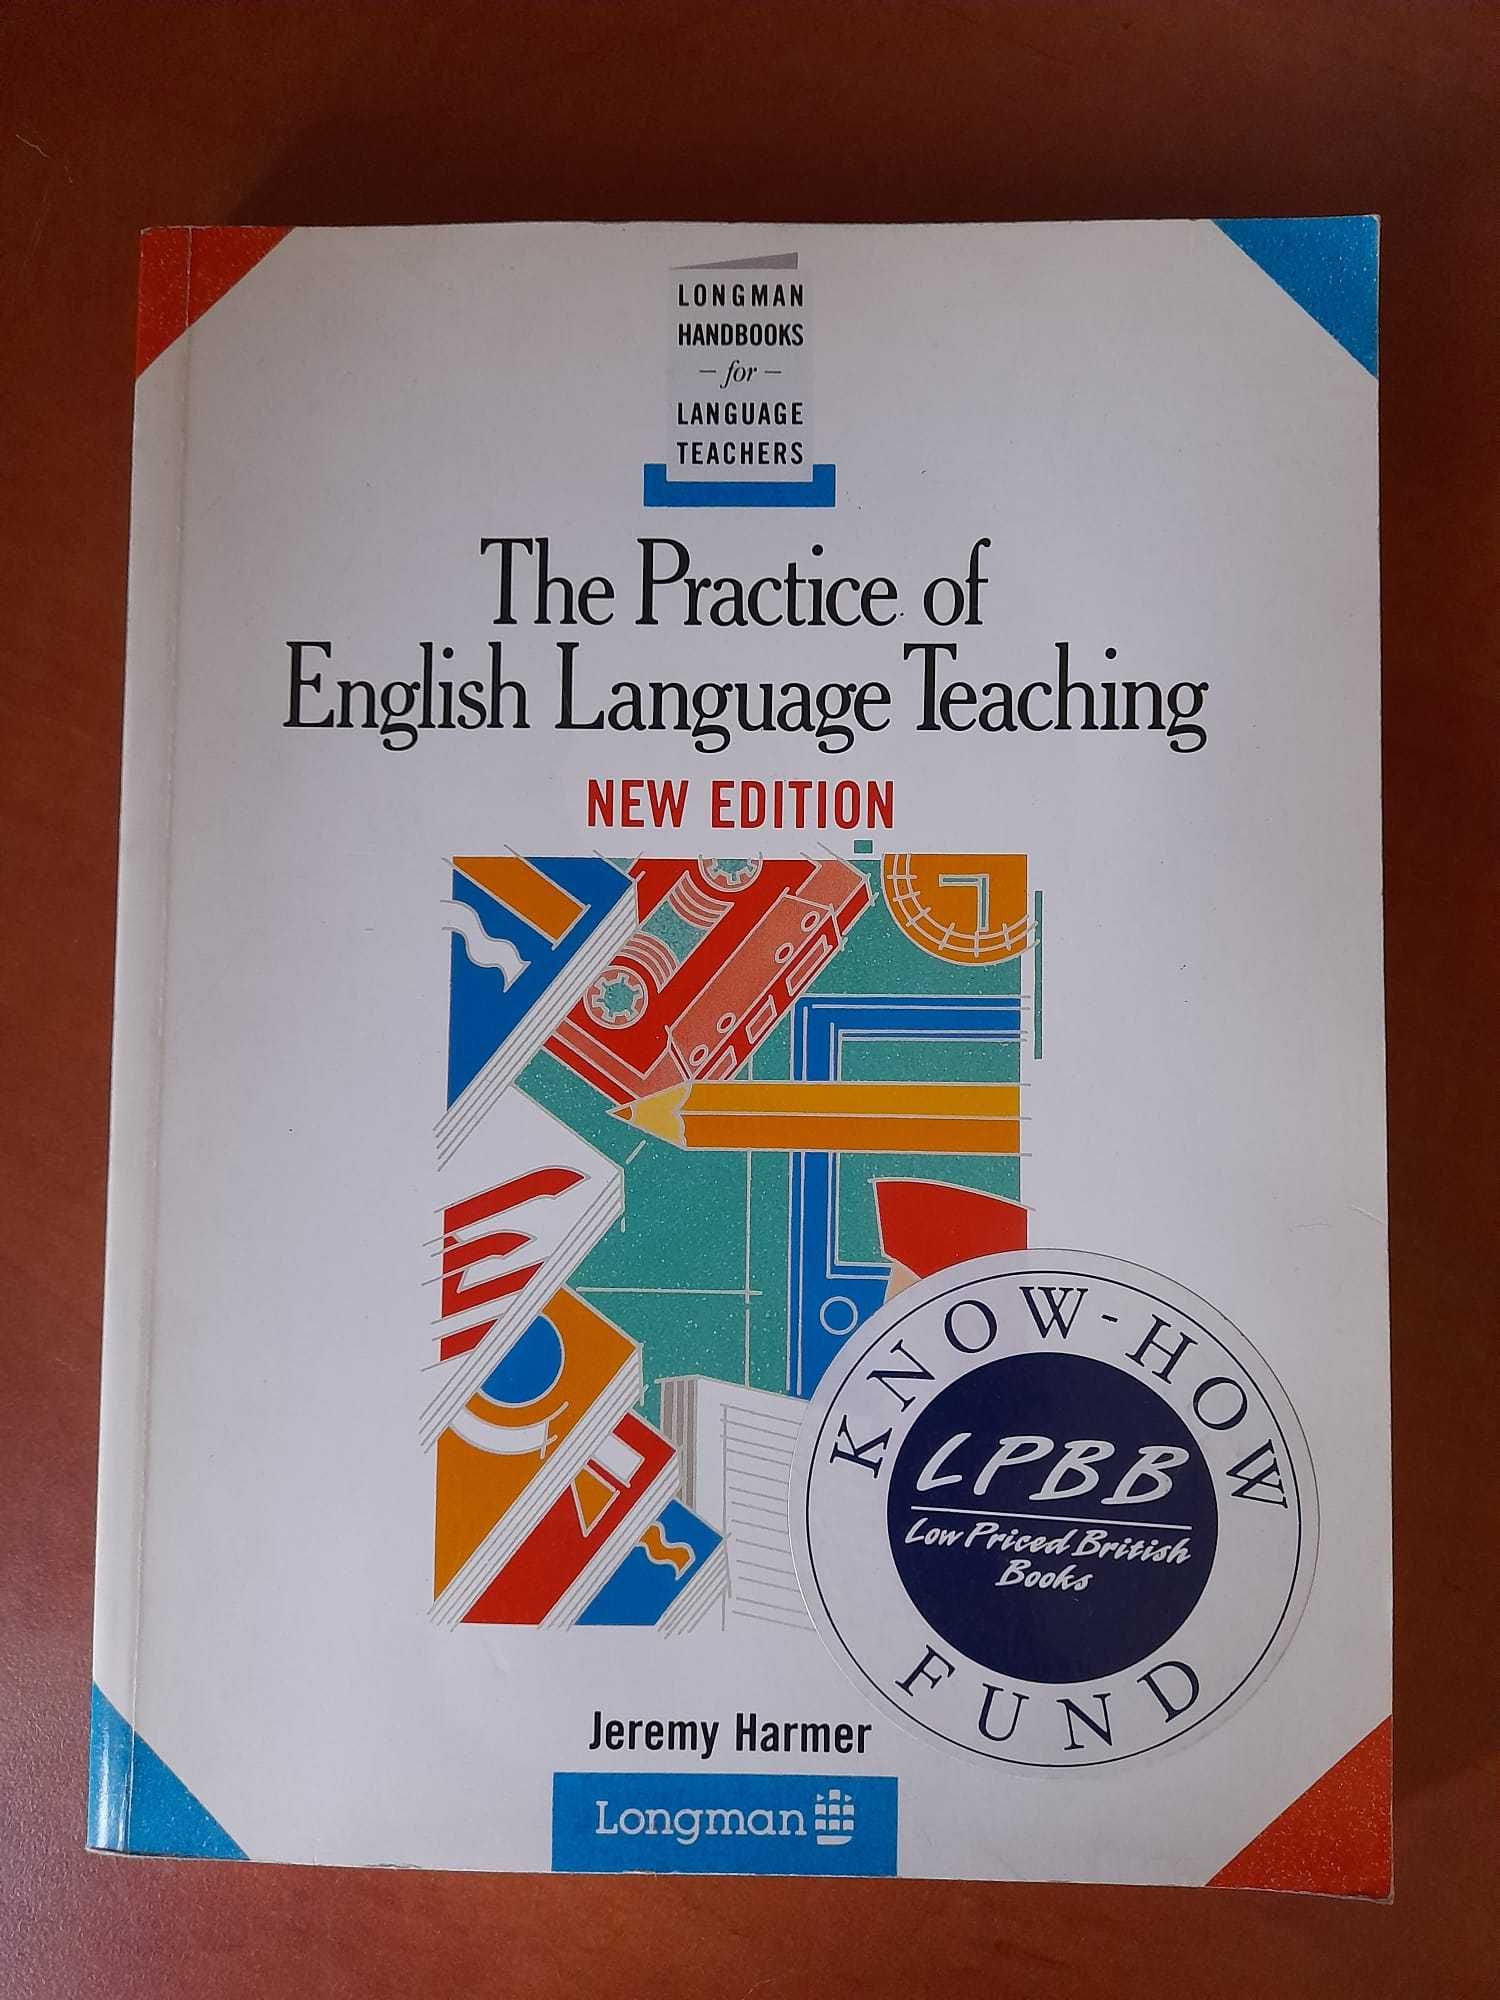 The practice of English language teaching; Longman, Jeremy Harmer